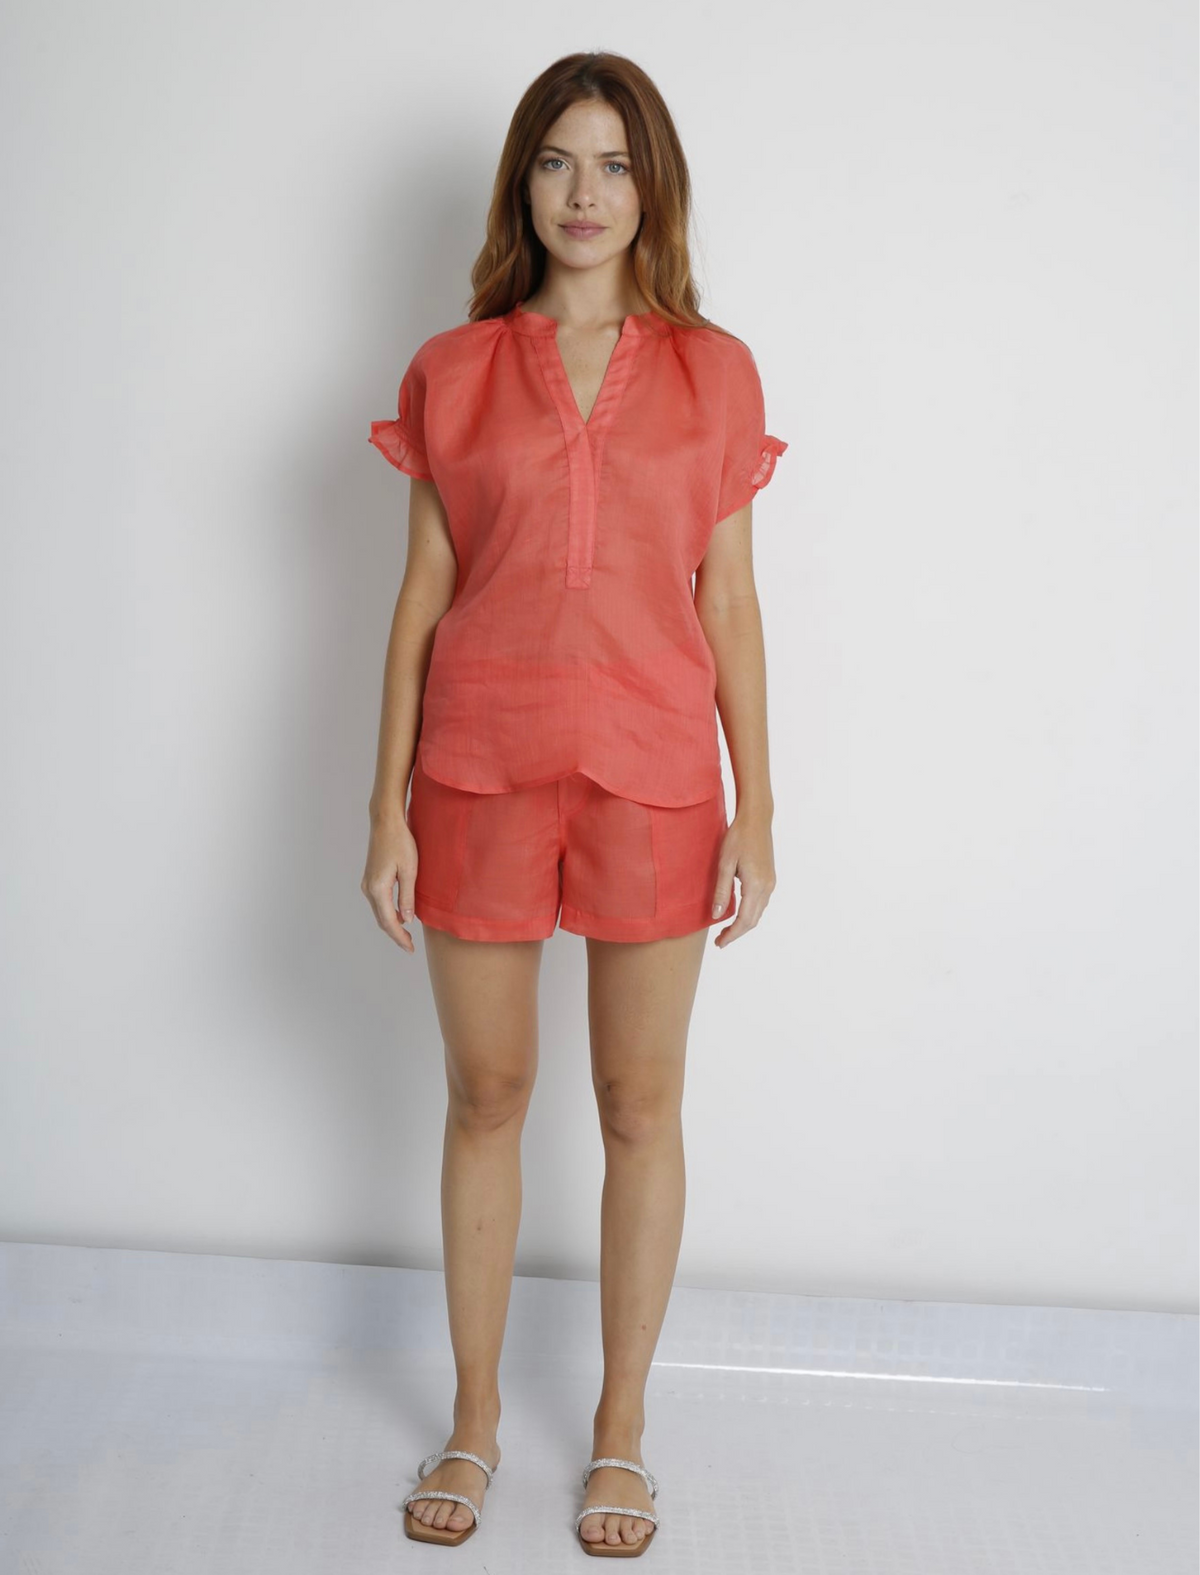 The Color Wear | Tienda Virtual | Blusas 1 Blusa Isotta